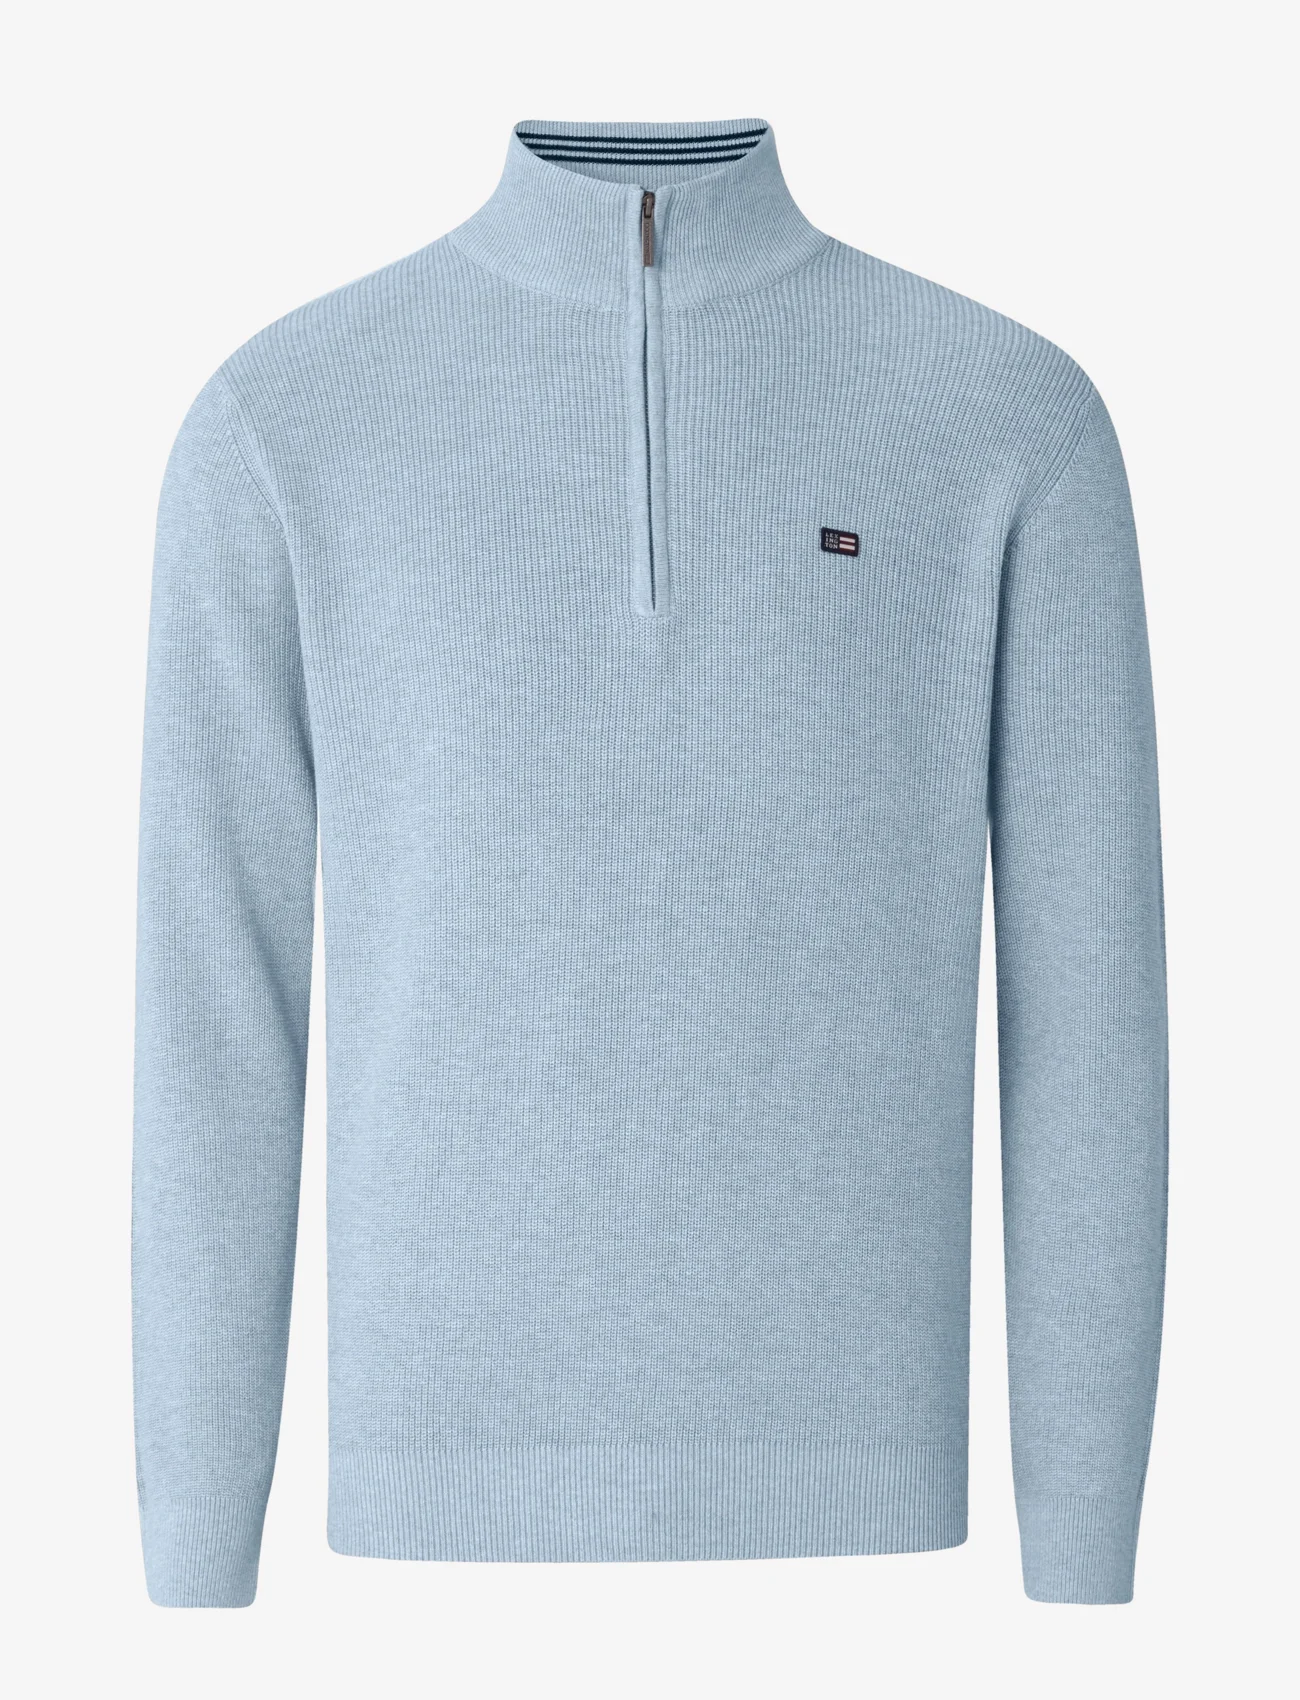 Lexington Clothing - Clay Cotton Half-Zip Sweater - miesten - light blue - 1